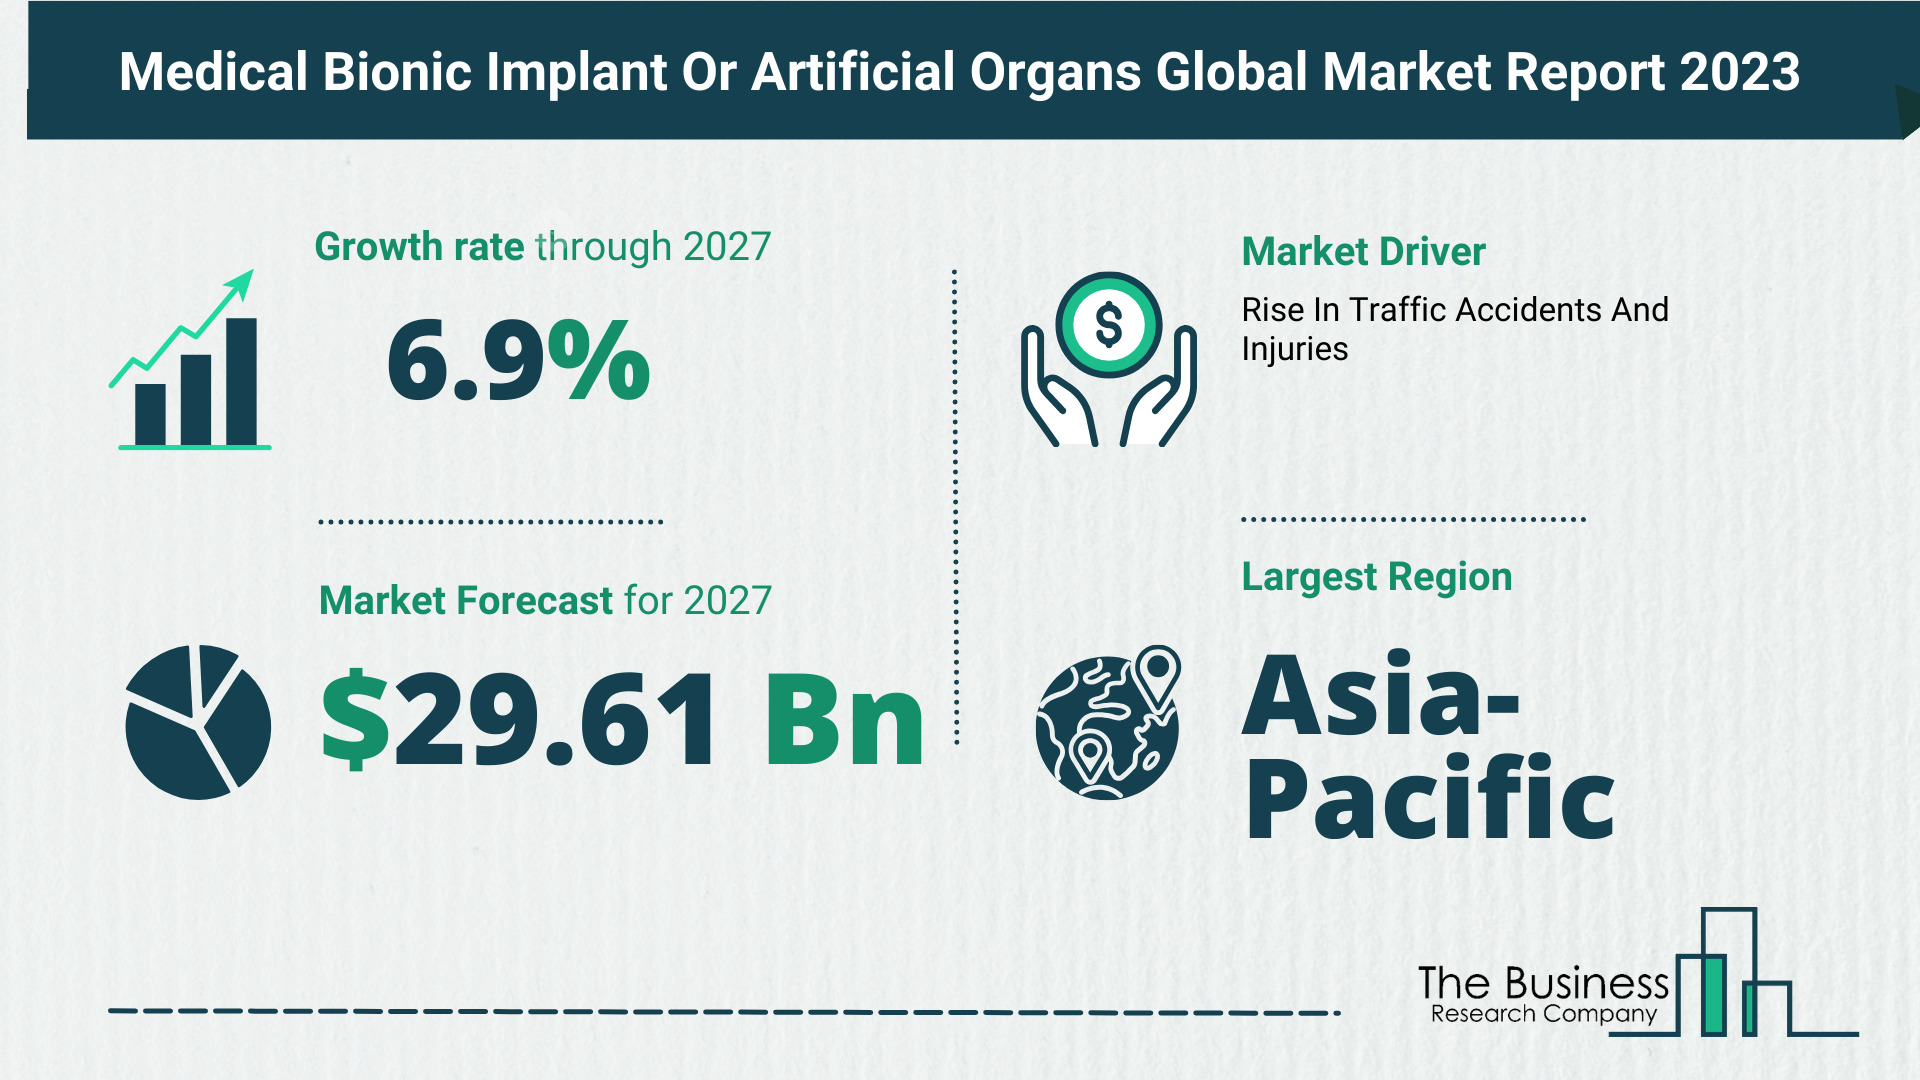 Global Medical Bionic Implant Or Artificial Organs Market